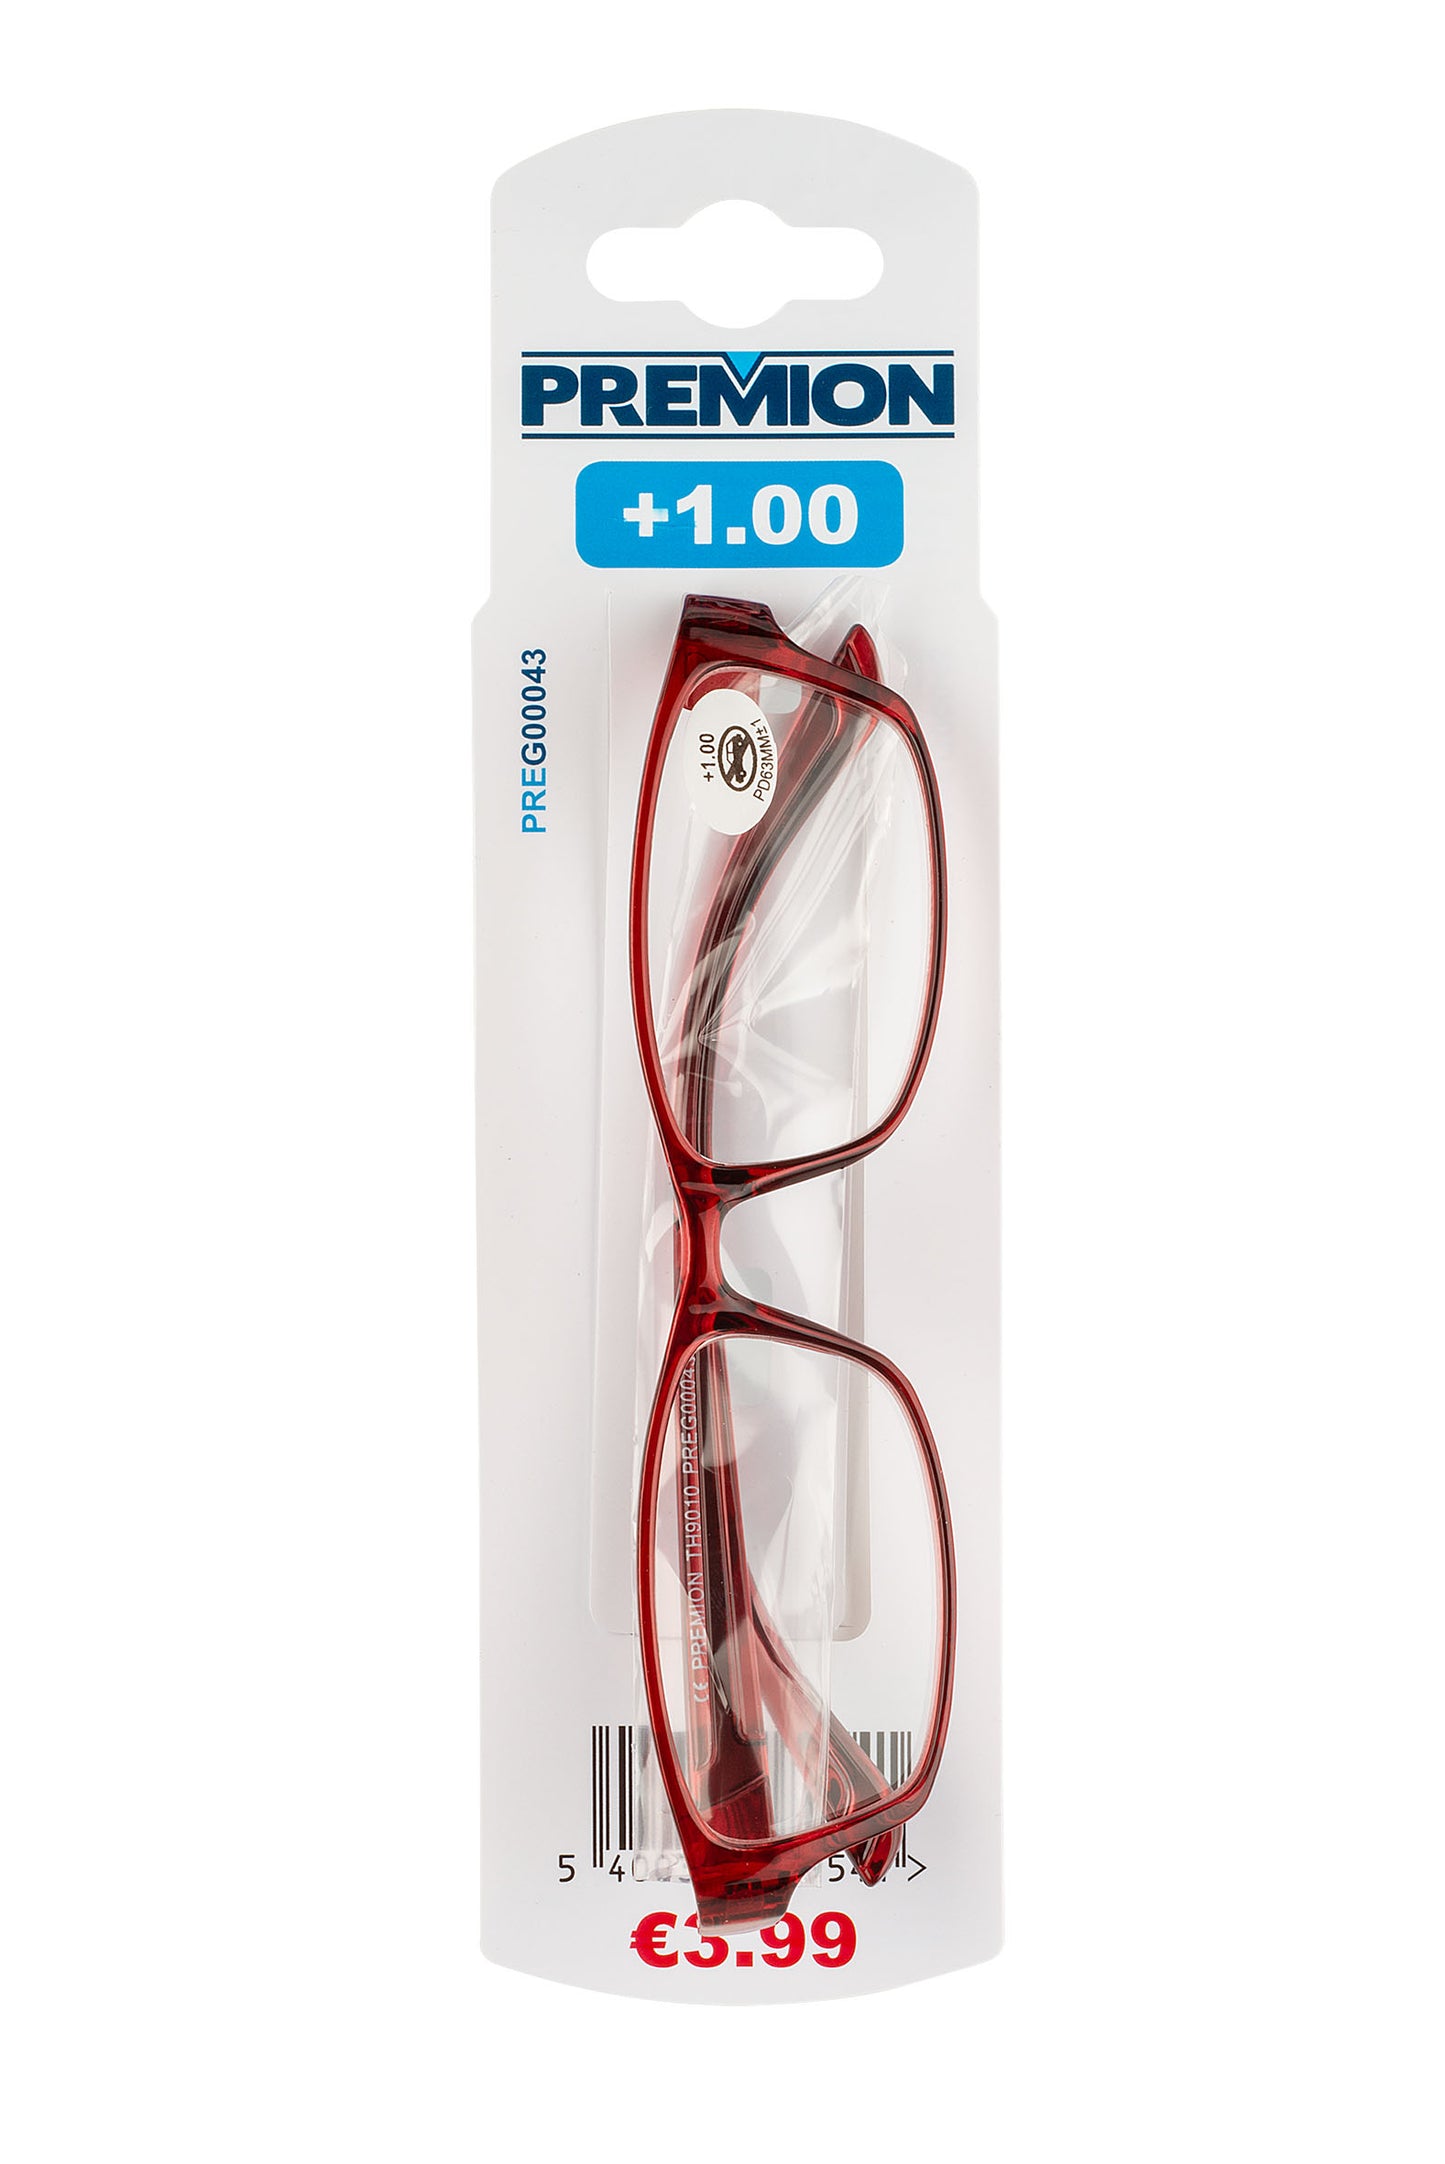 Premion - Reading Glasses - Red/Black (Model 3)